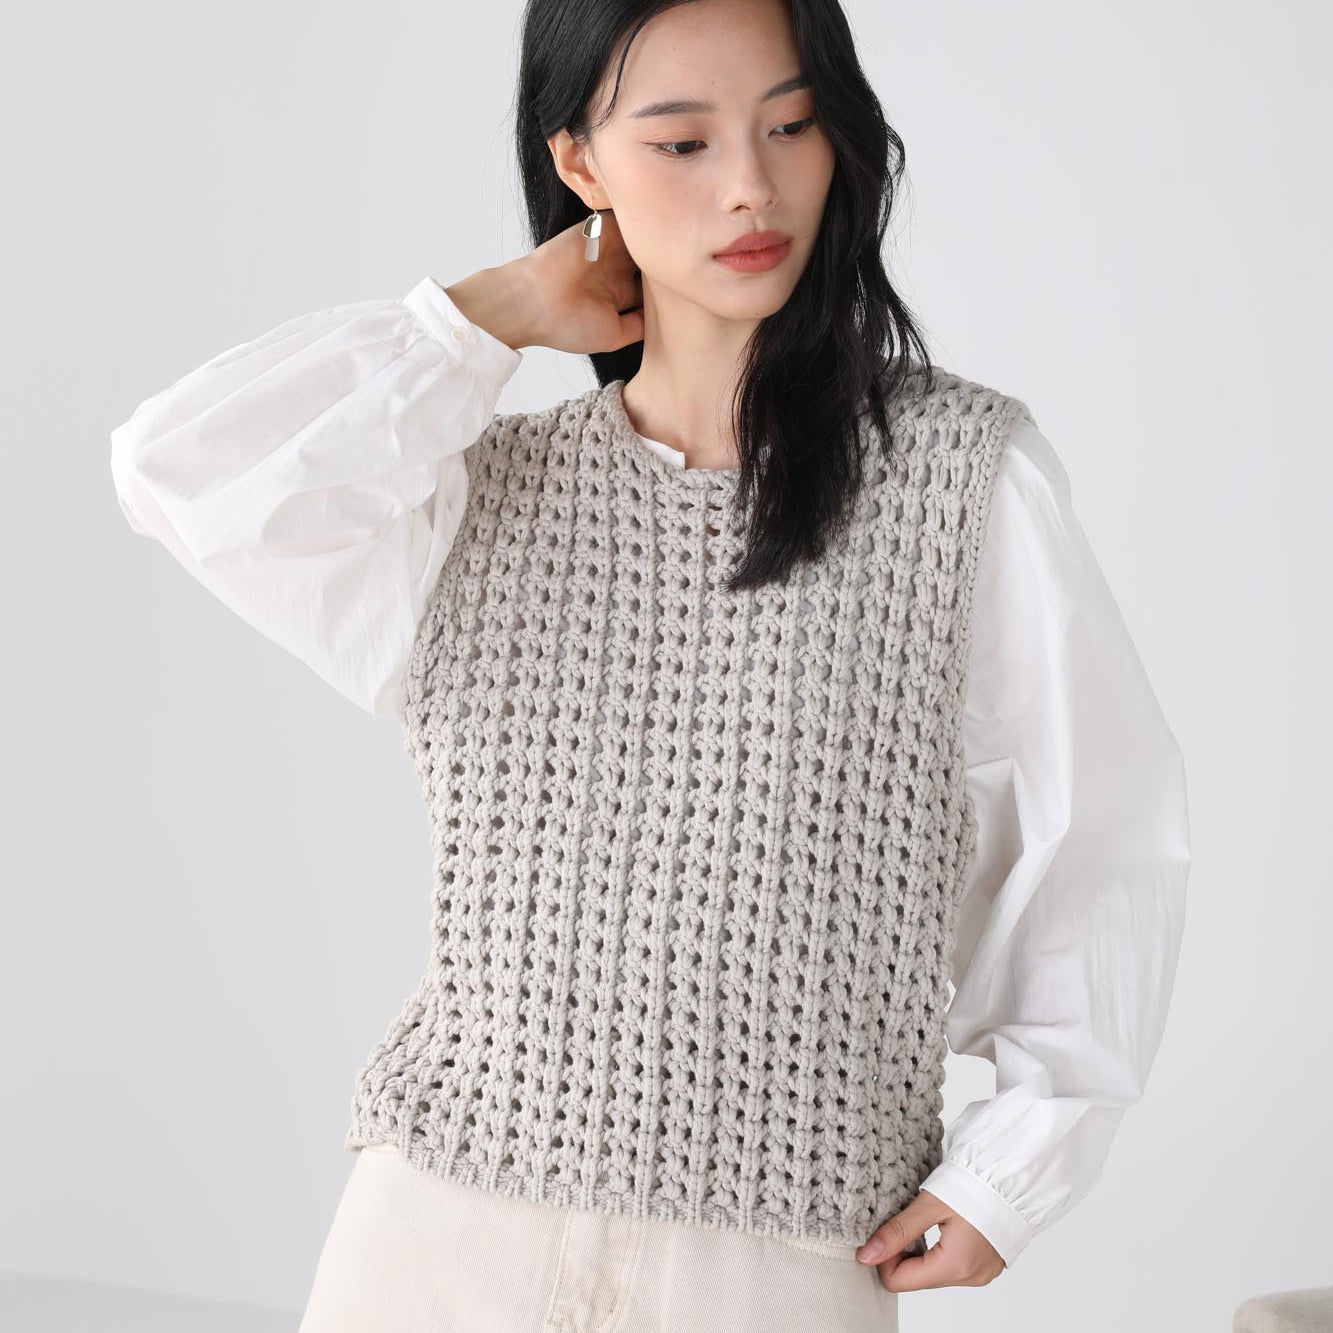 Evie heavy knit grey vest top